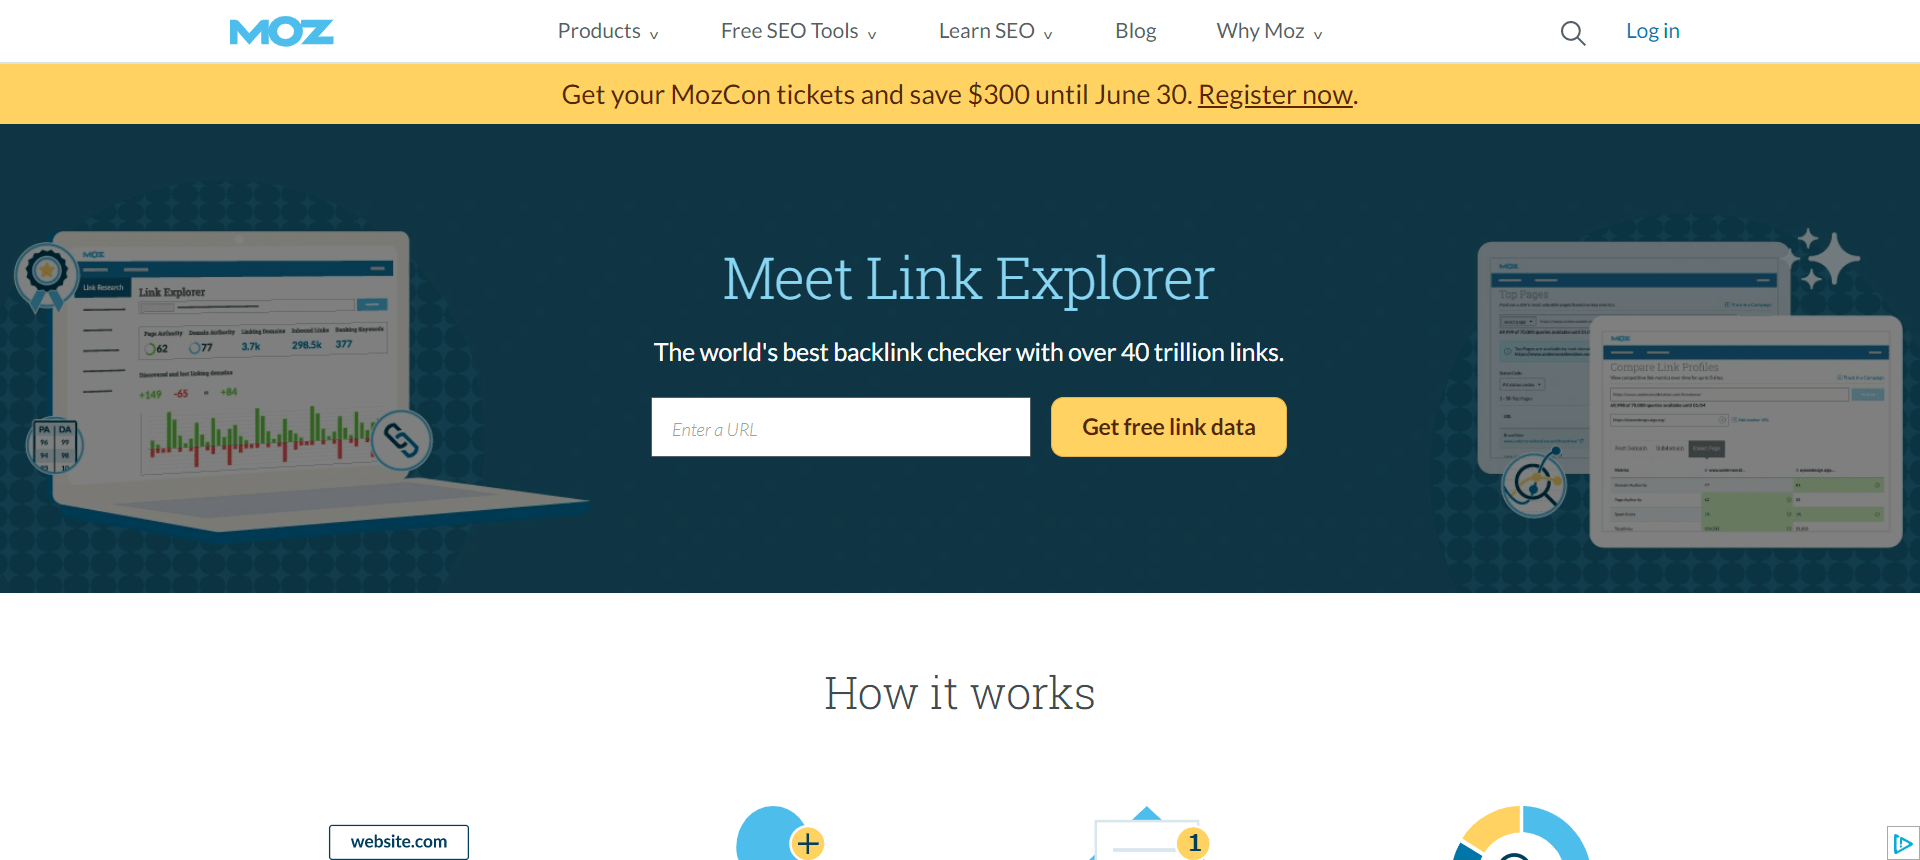 Link Explorerのメイン画像